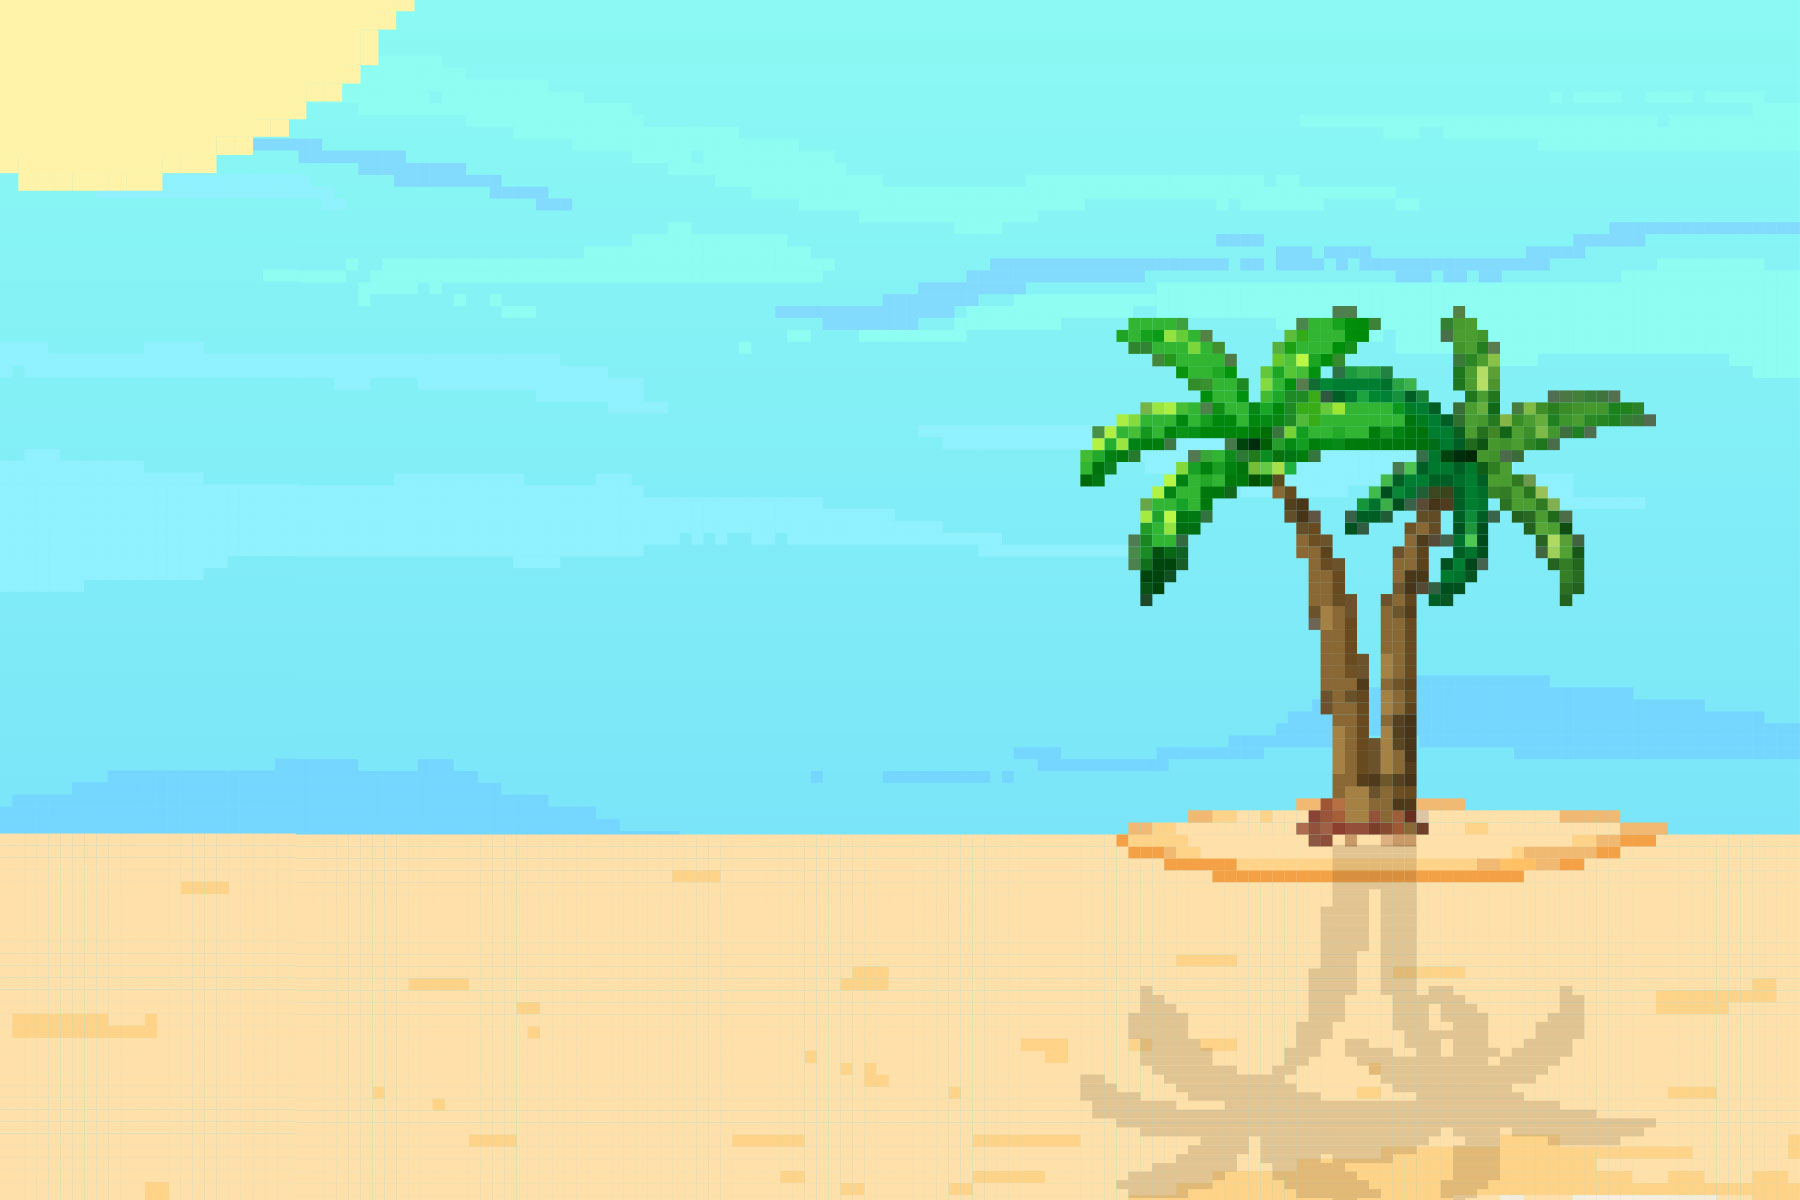 piexlated summer scene of palm trees on a sandy beach